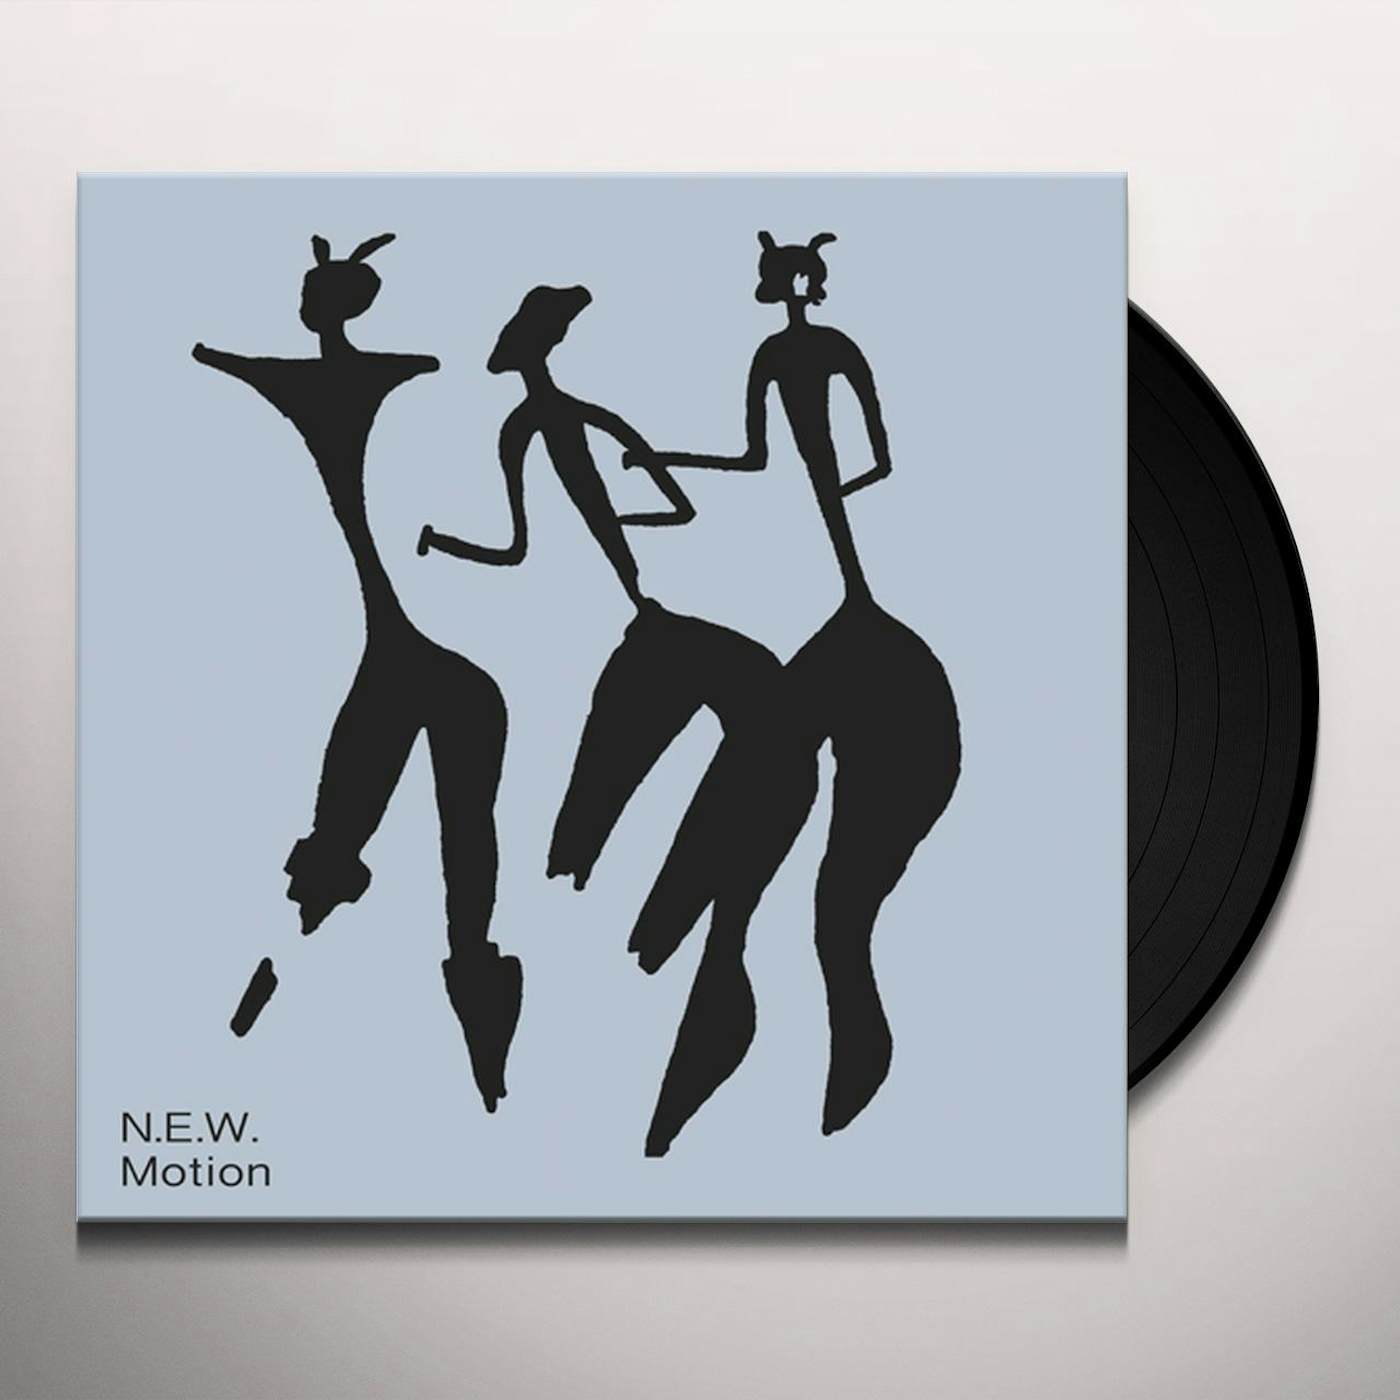 N.E.W. Motion Vinyl Record